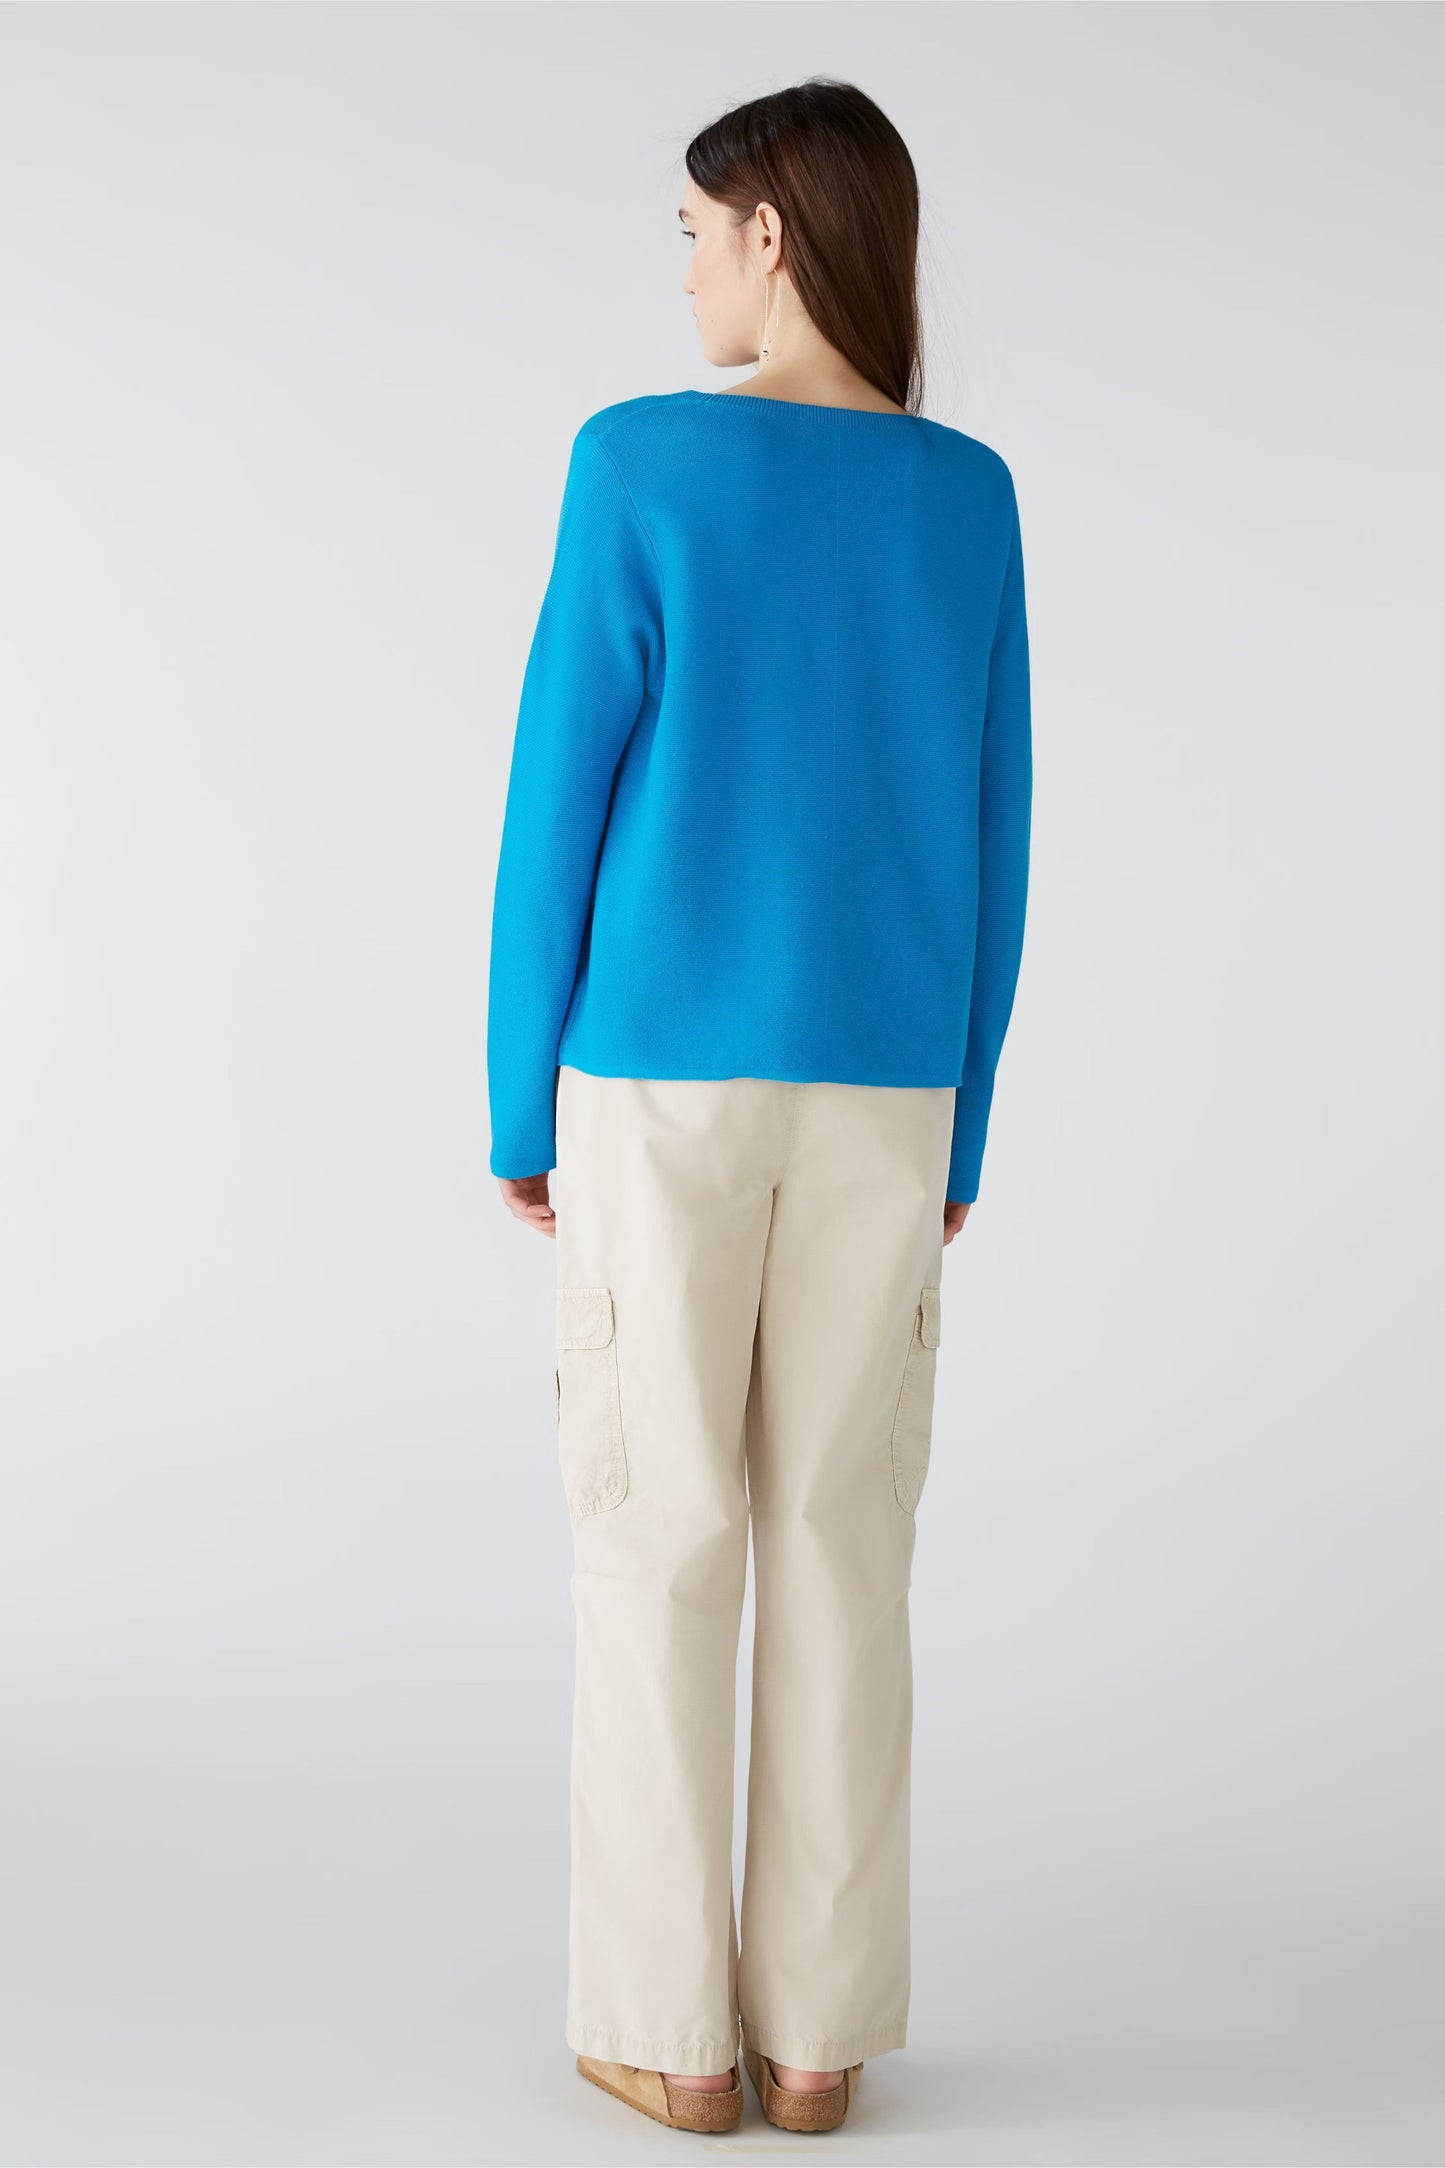 Oui Jewel Blue Sweater